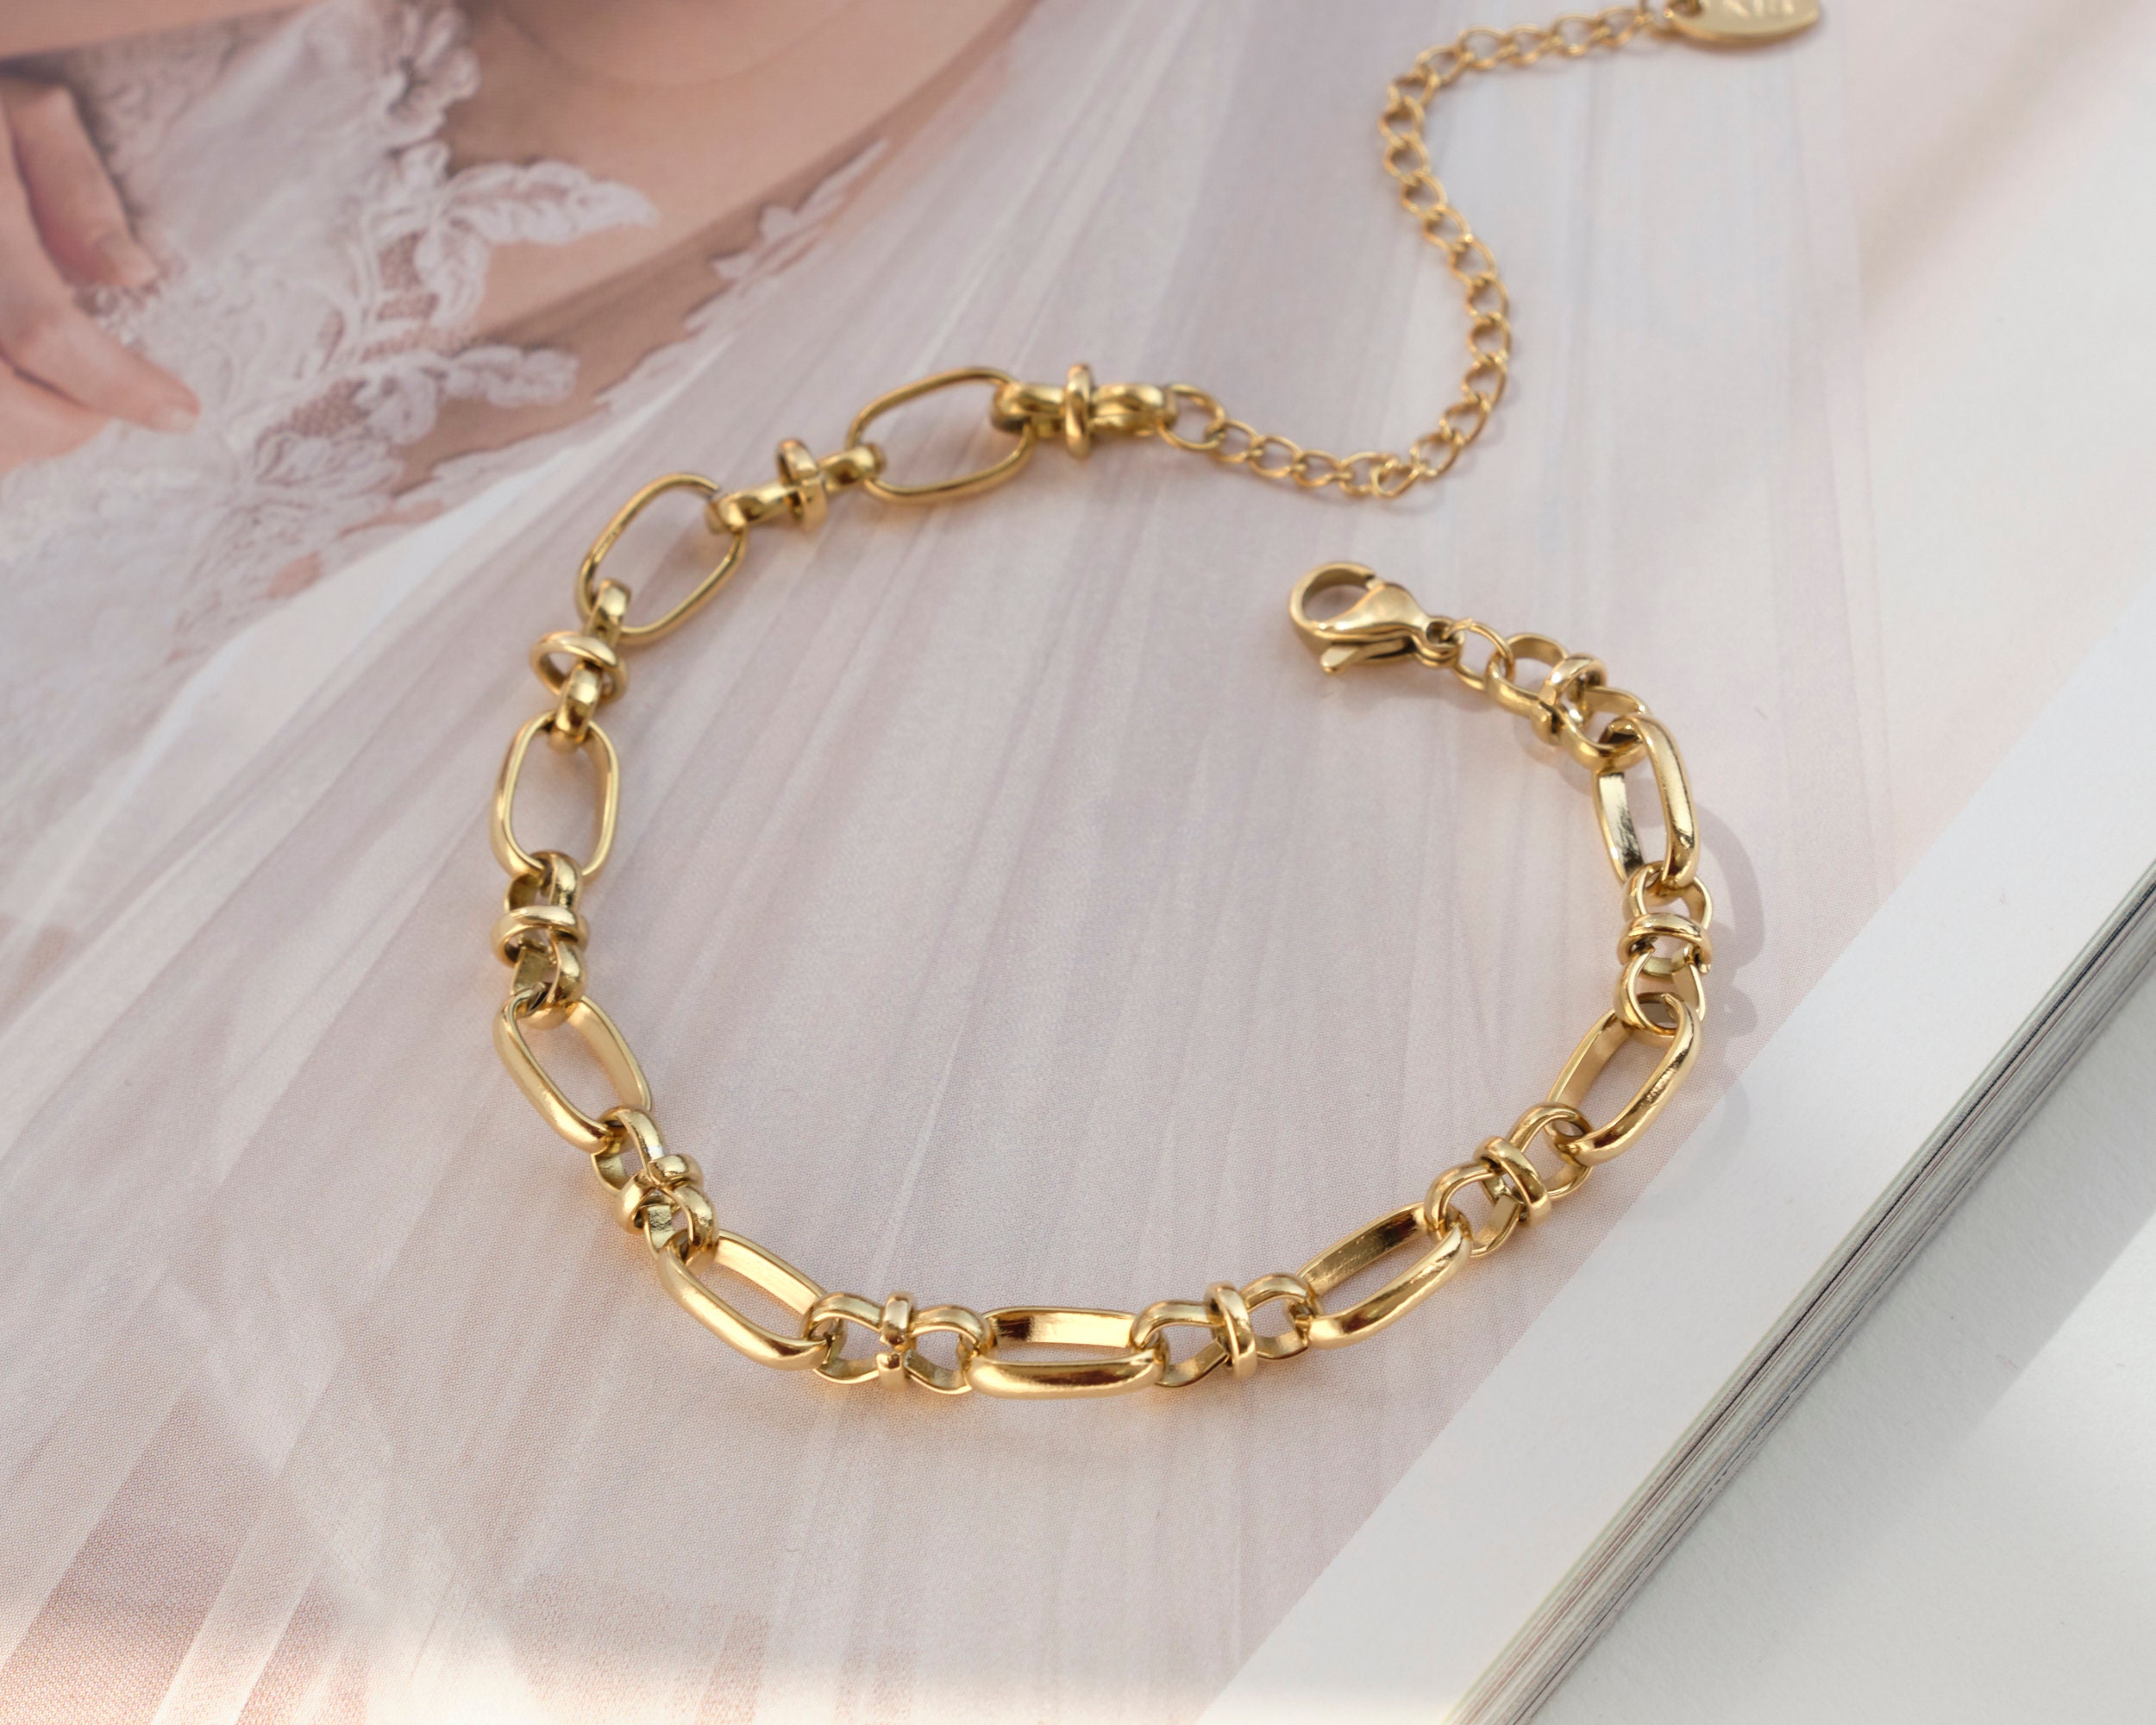 18K GOLD FILLED Gold chain bracelet for women LInk chain | Etsy